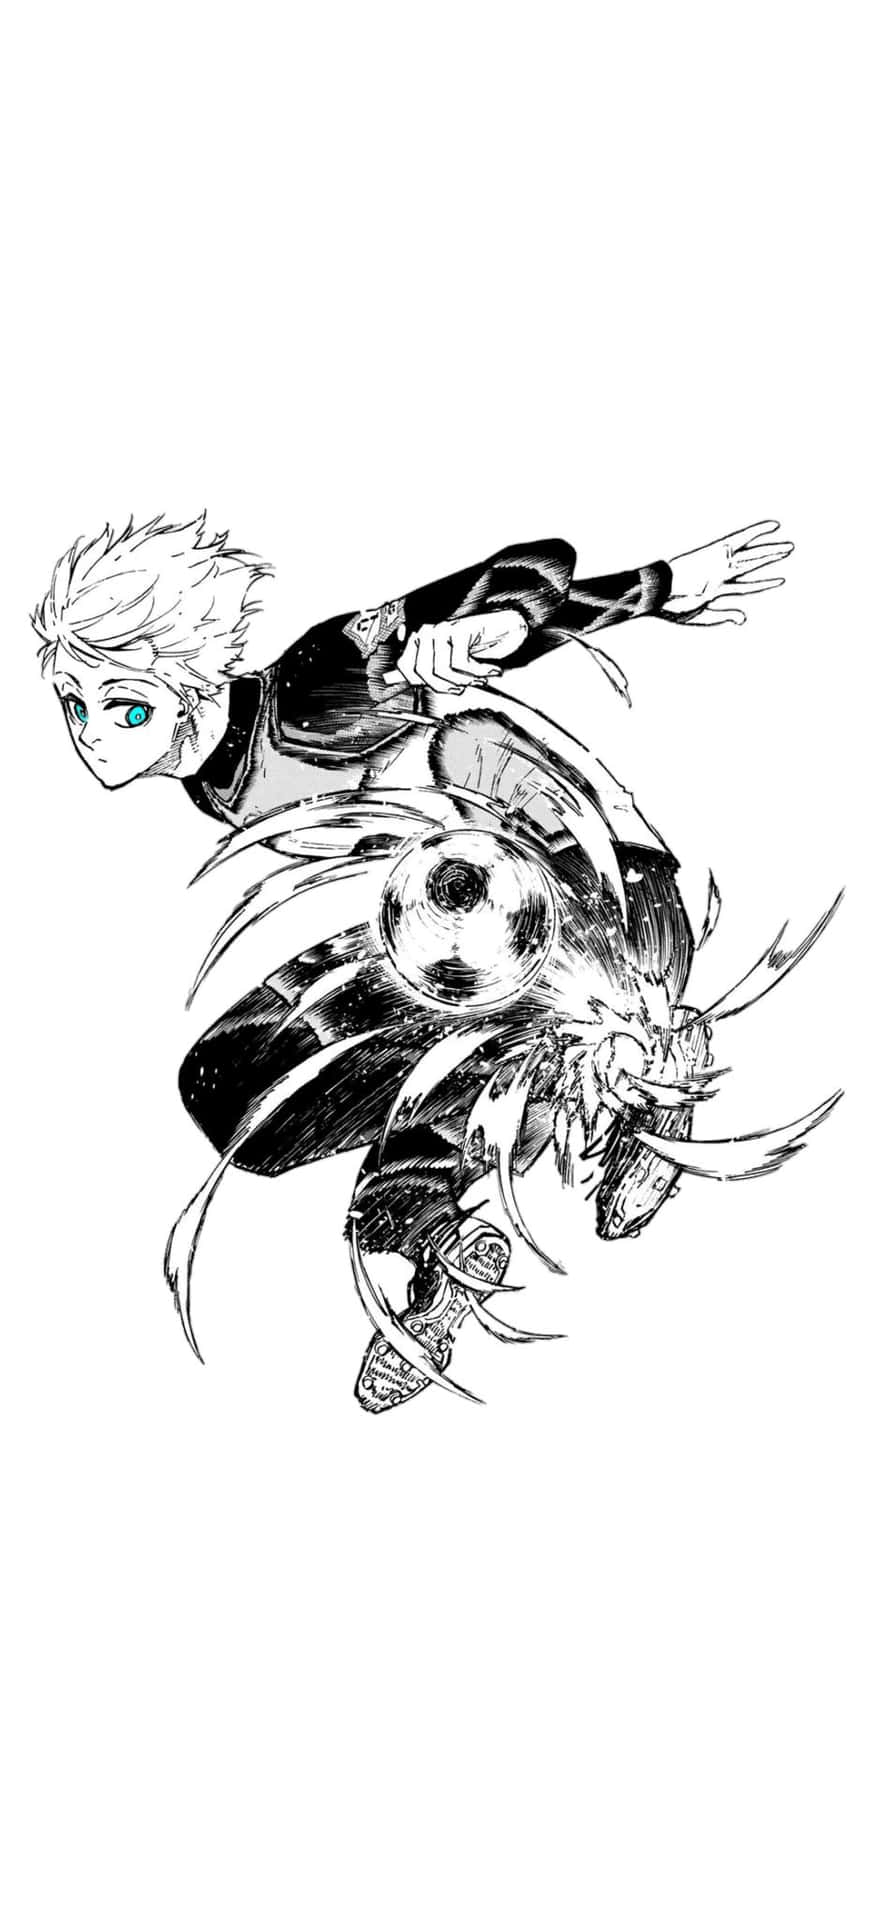 Blue Lock Manga Dynamic Soccer Action Wallpaper